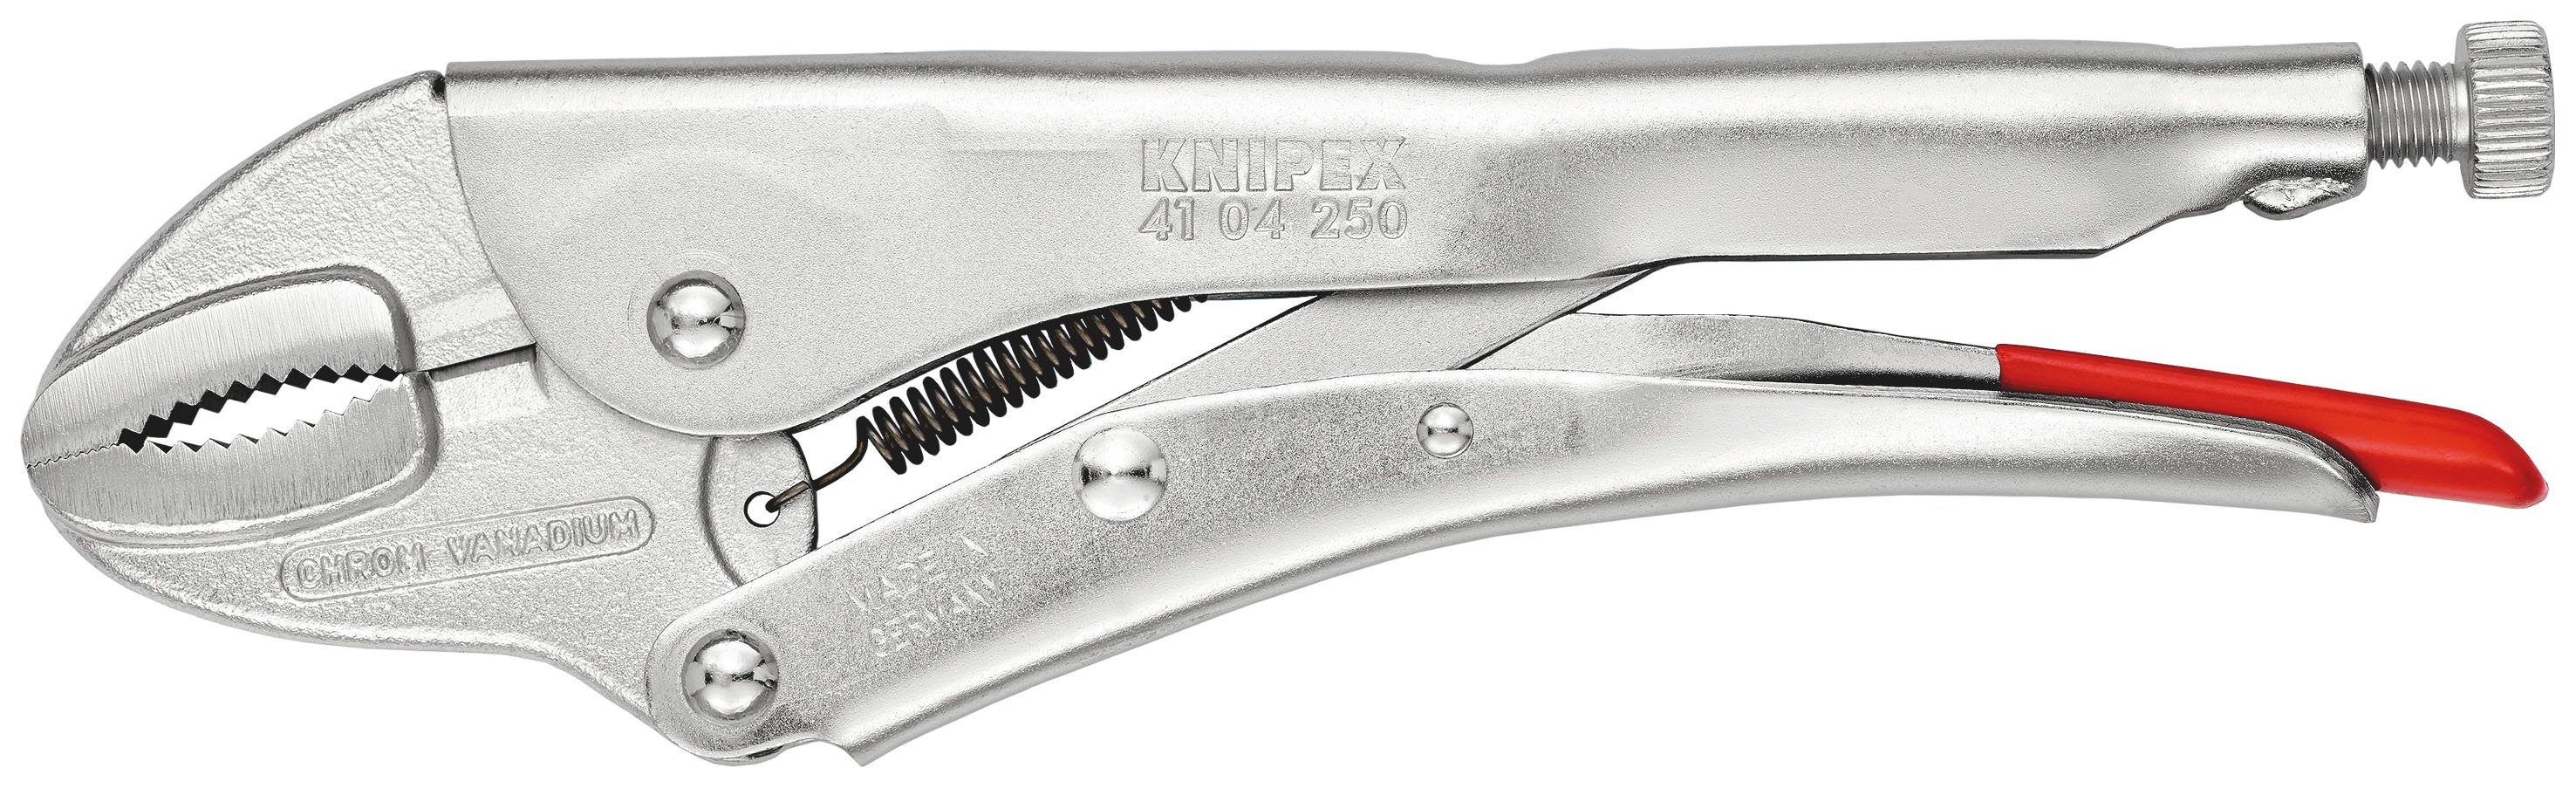 Knipex Gripzange 1-tlg., mm 04 EAN, 250 verzinkt 250 41